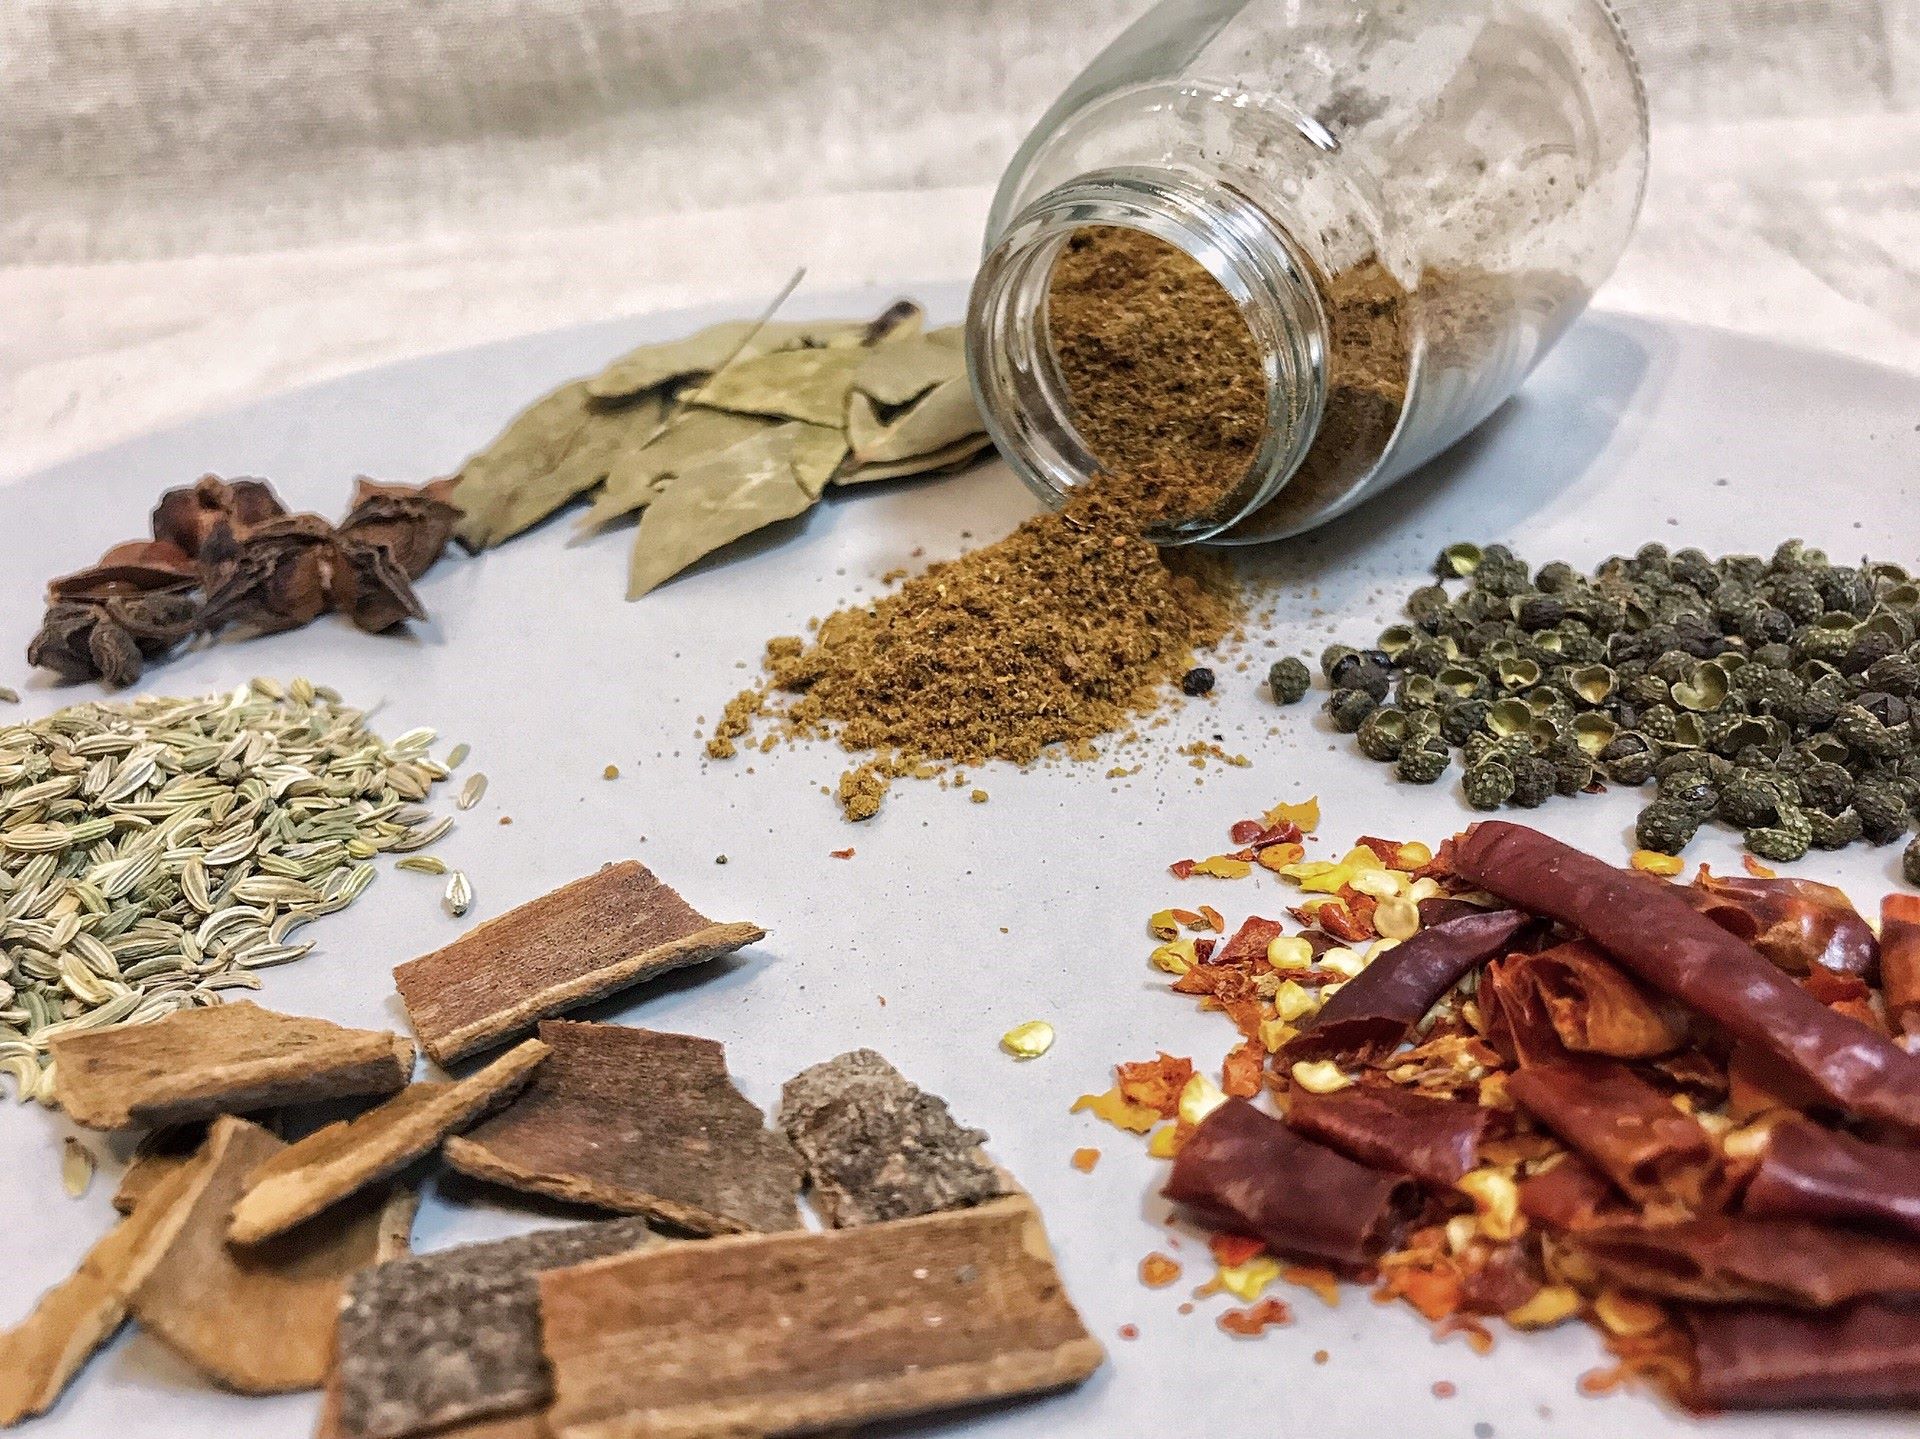 How to make five-spice powder seasoning